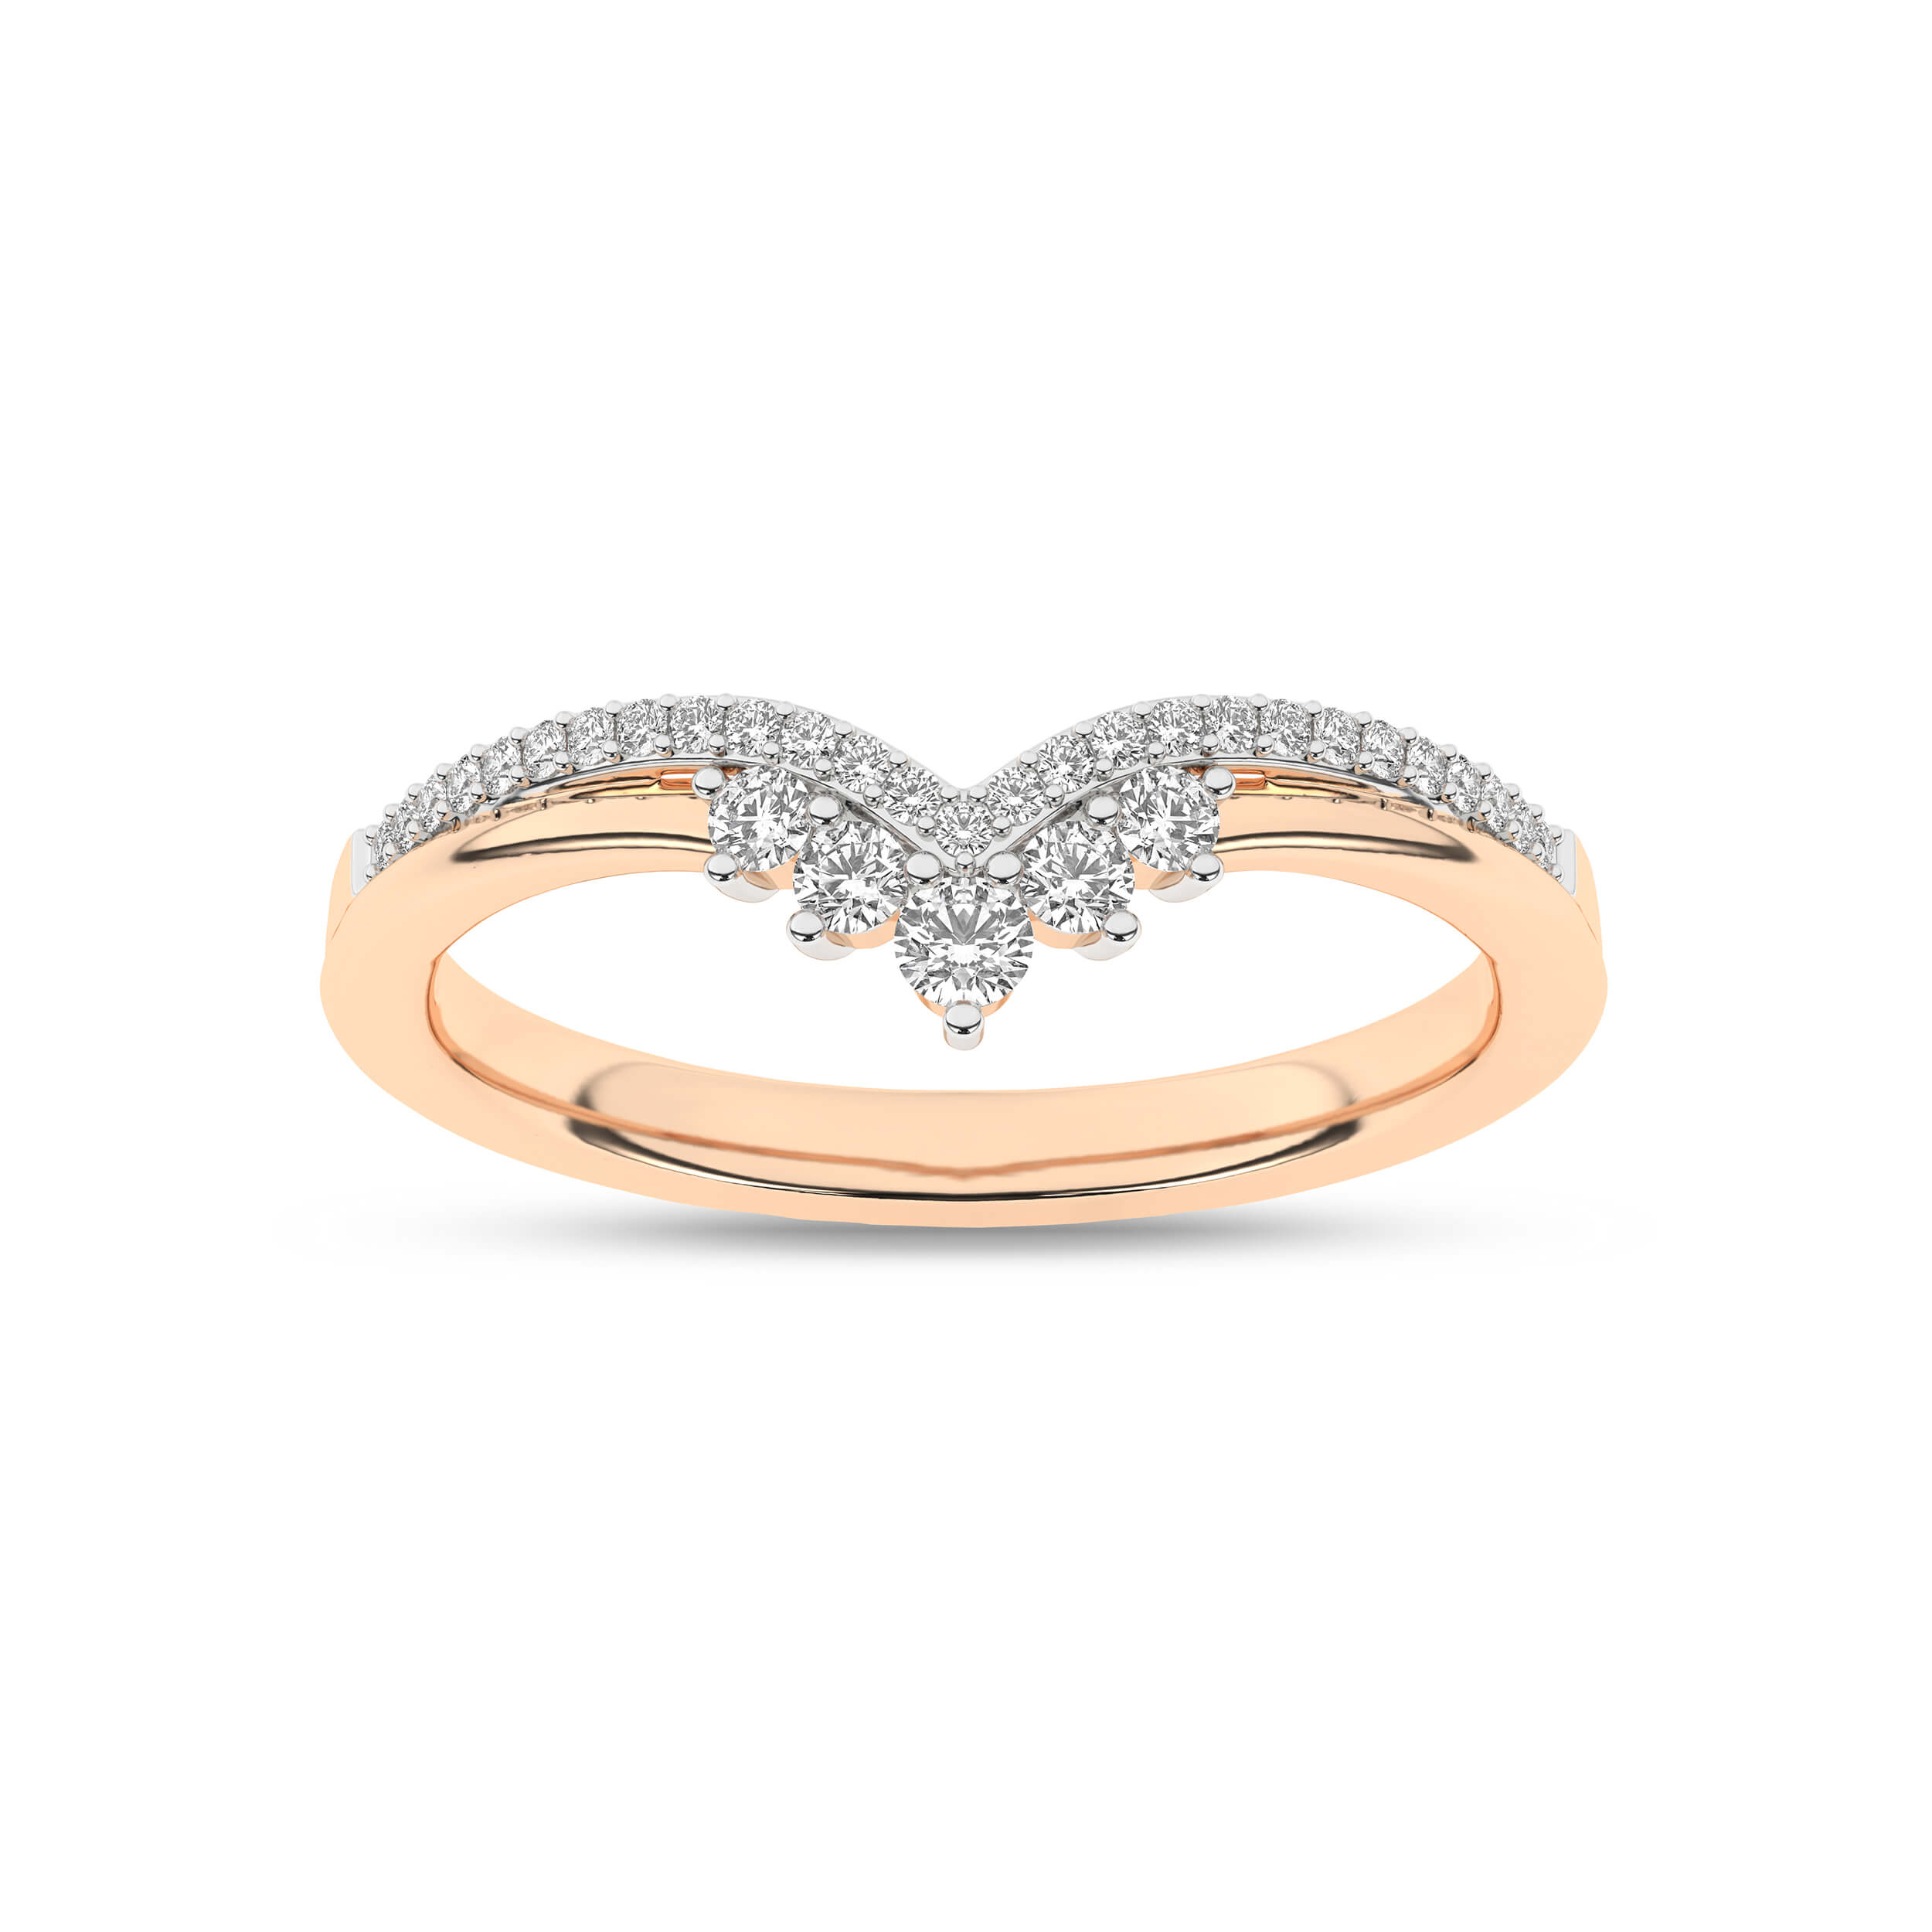 Inel din Aur Roz 14K cu Diamante, articol RF16788, previzualizare foto 1